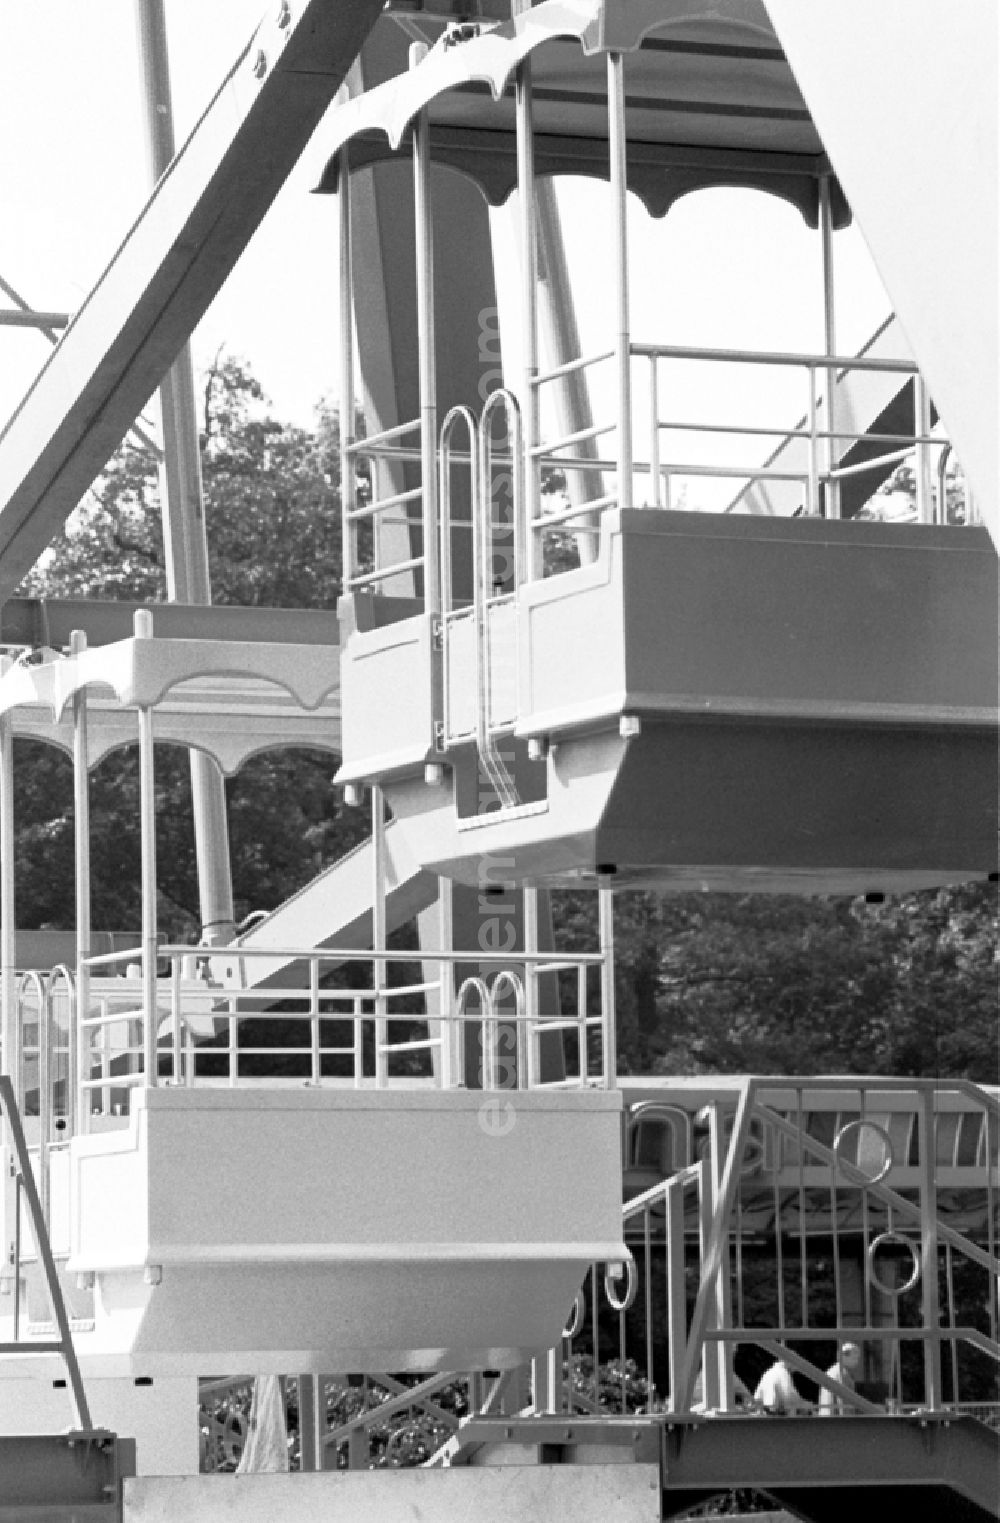 GDR image archive: Berlin - Ferris wheel in the funfair Spreepark Plaenterwald in Berlin Rummelsburg, the former capital of the GDR, German Democratic Republic